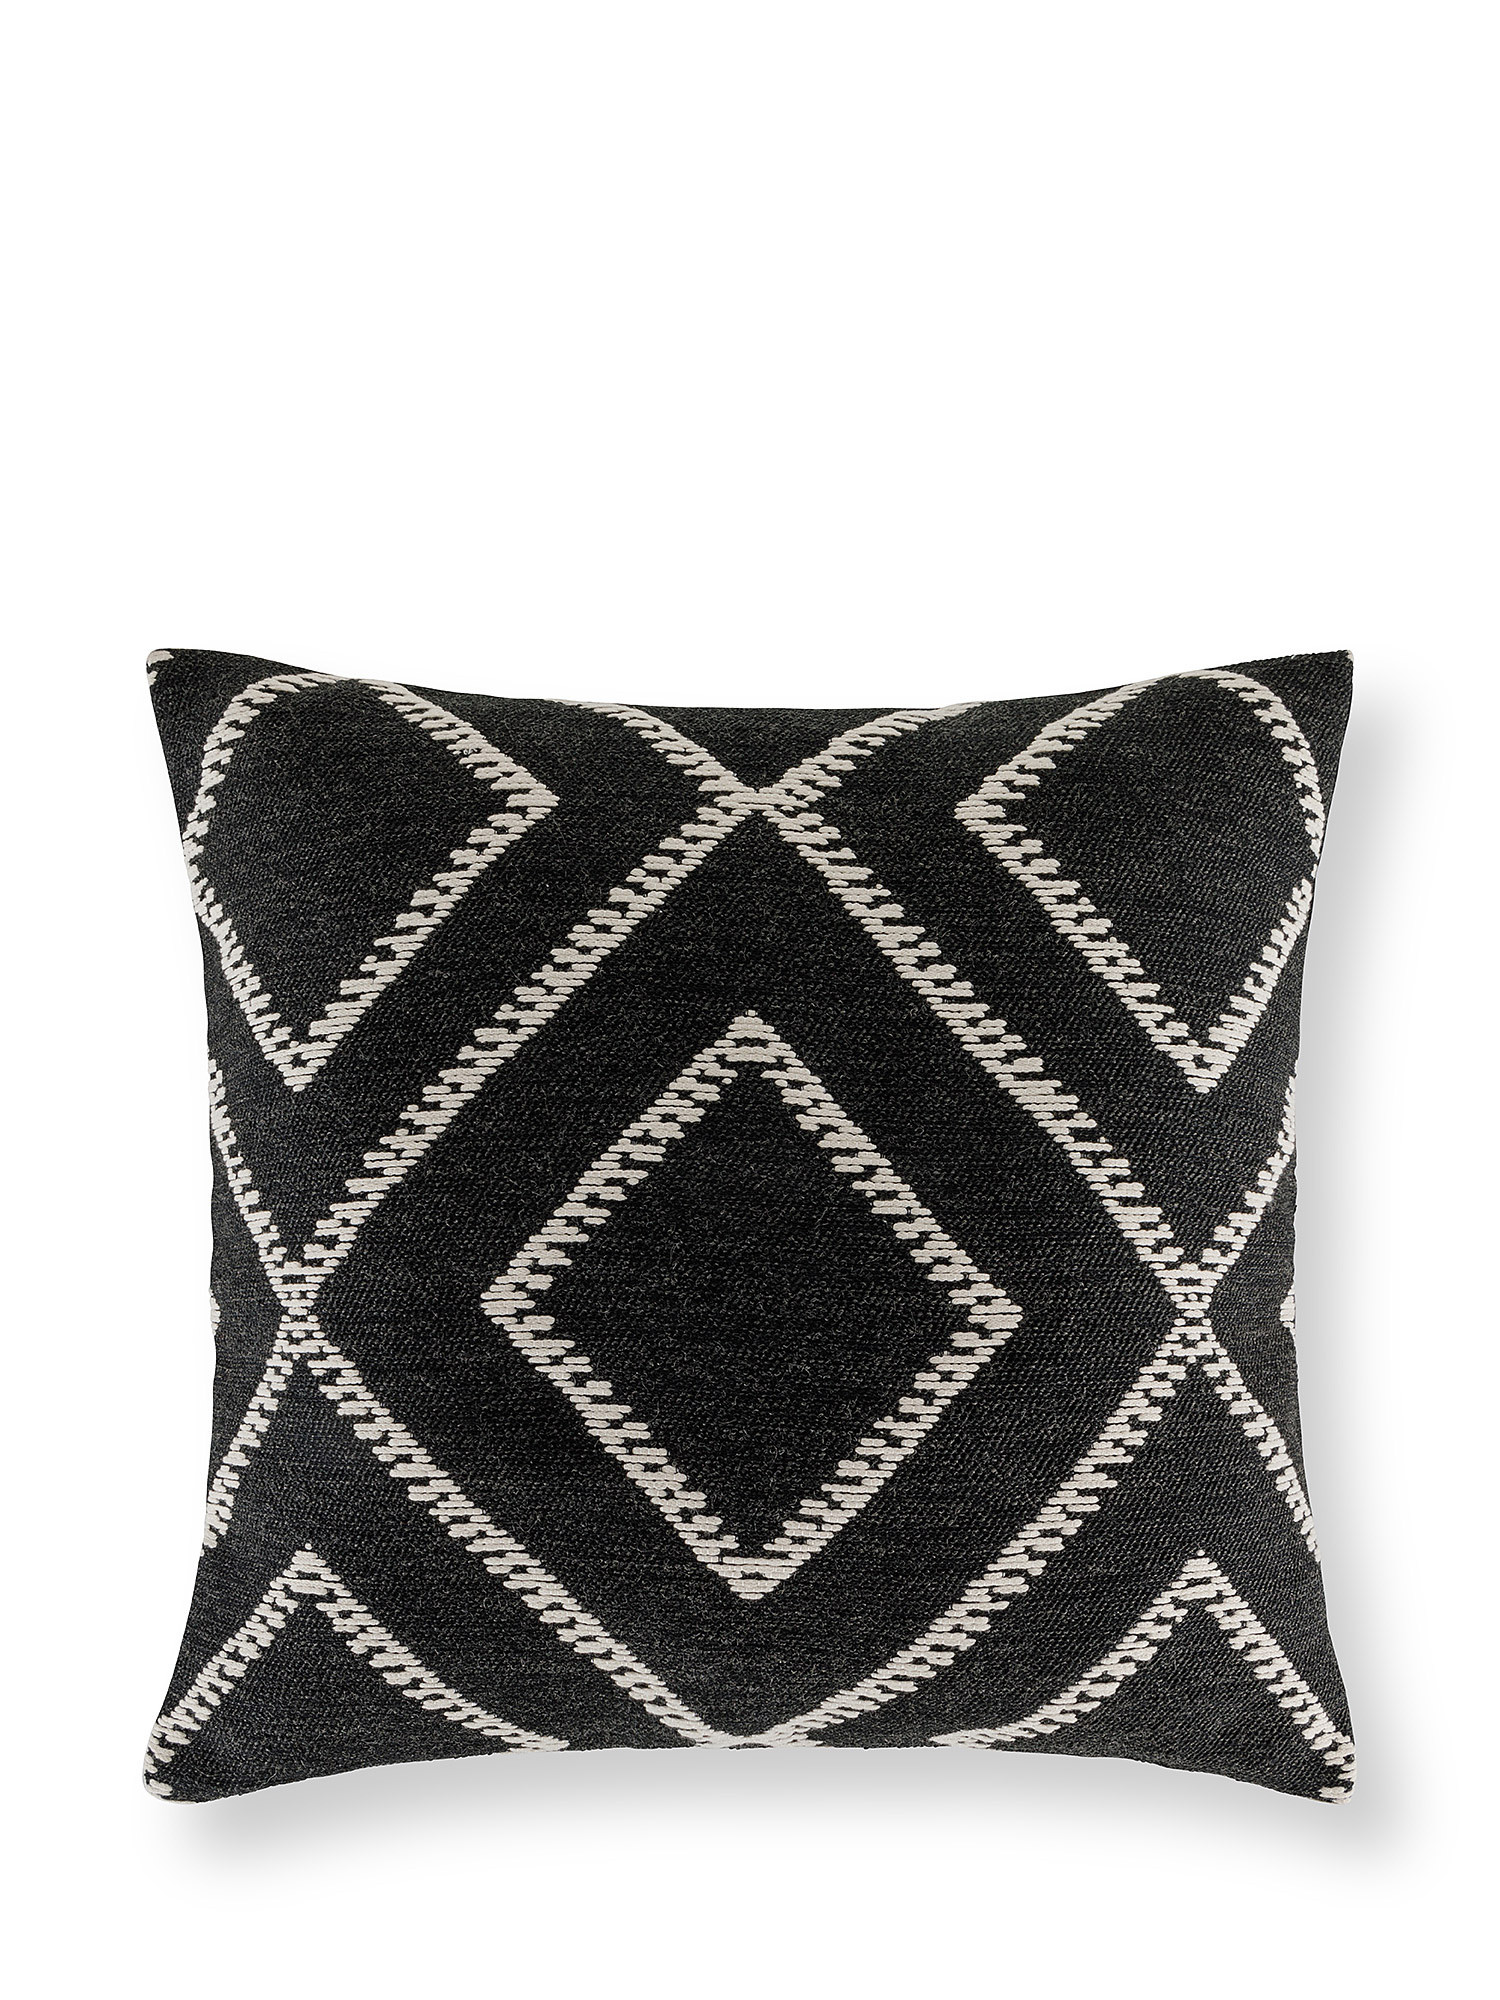 Jacquard cushion with geometric motif 50x50cm, Black, large image number 0